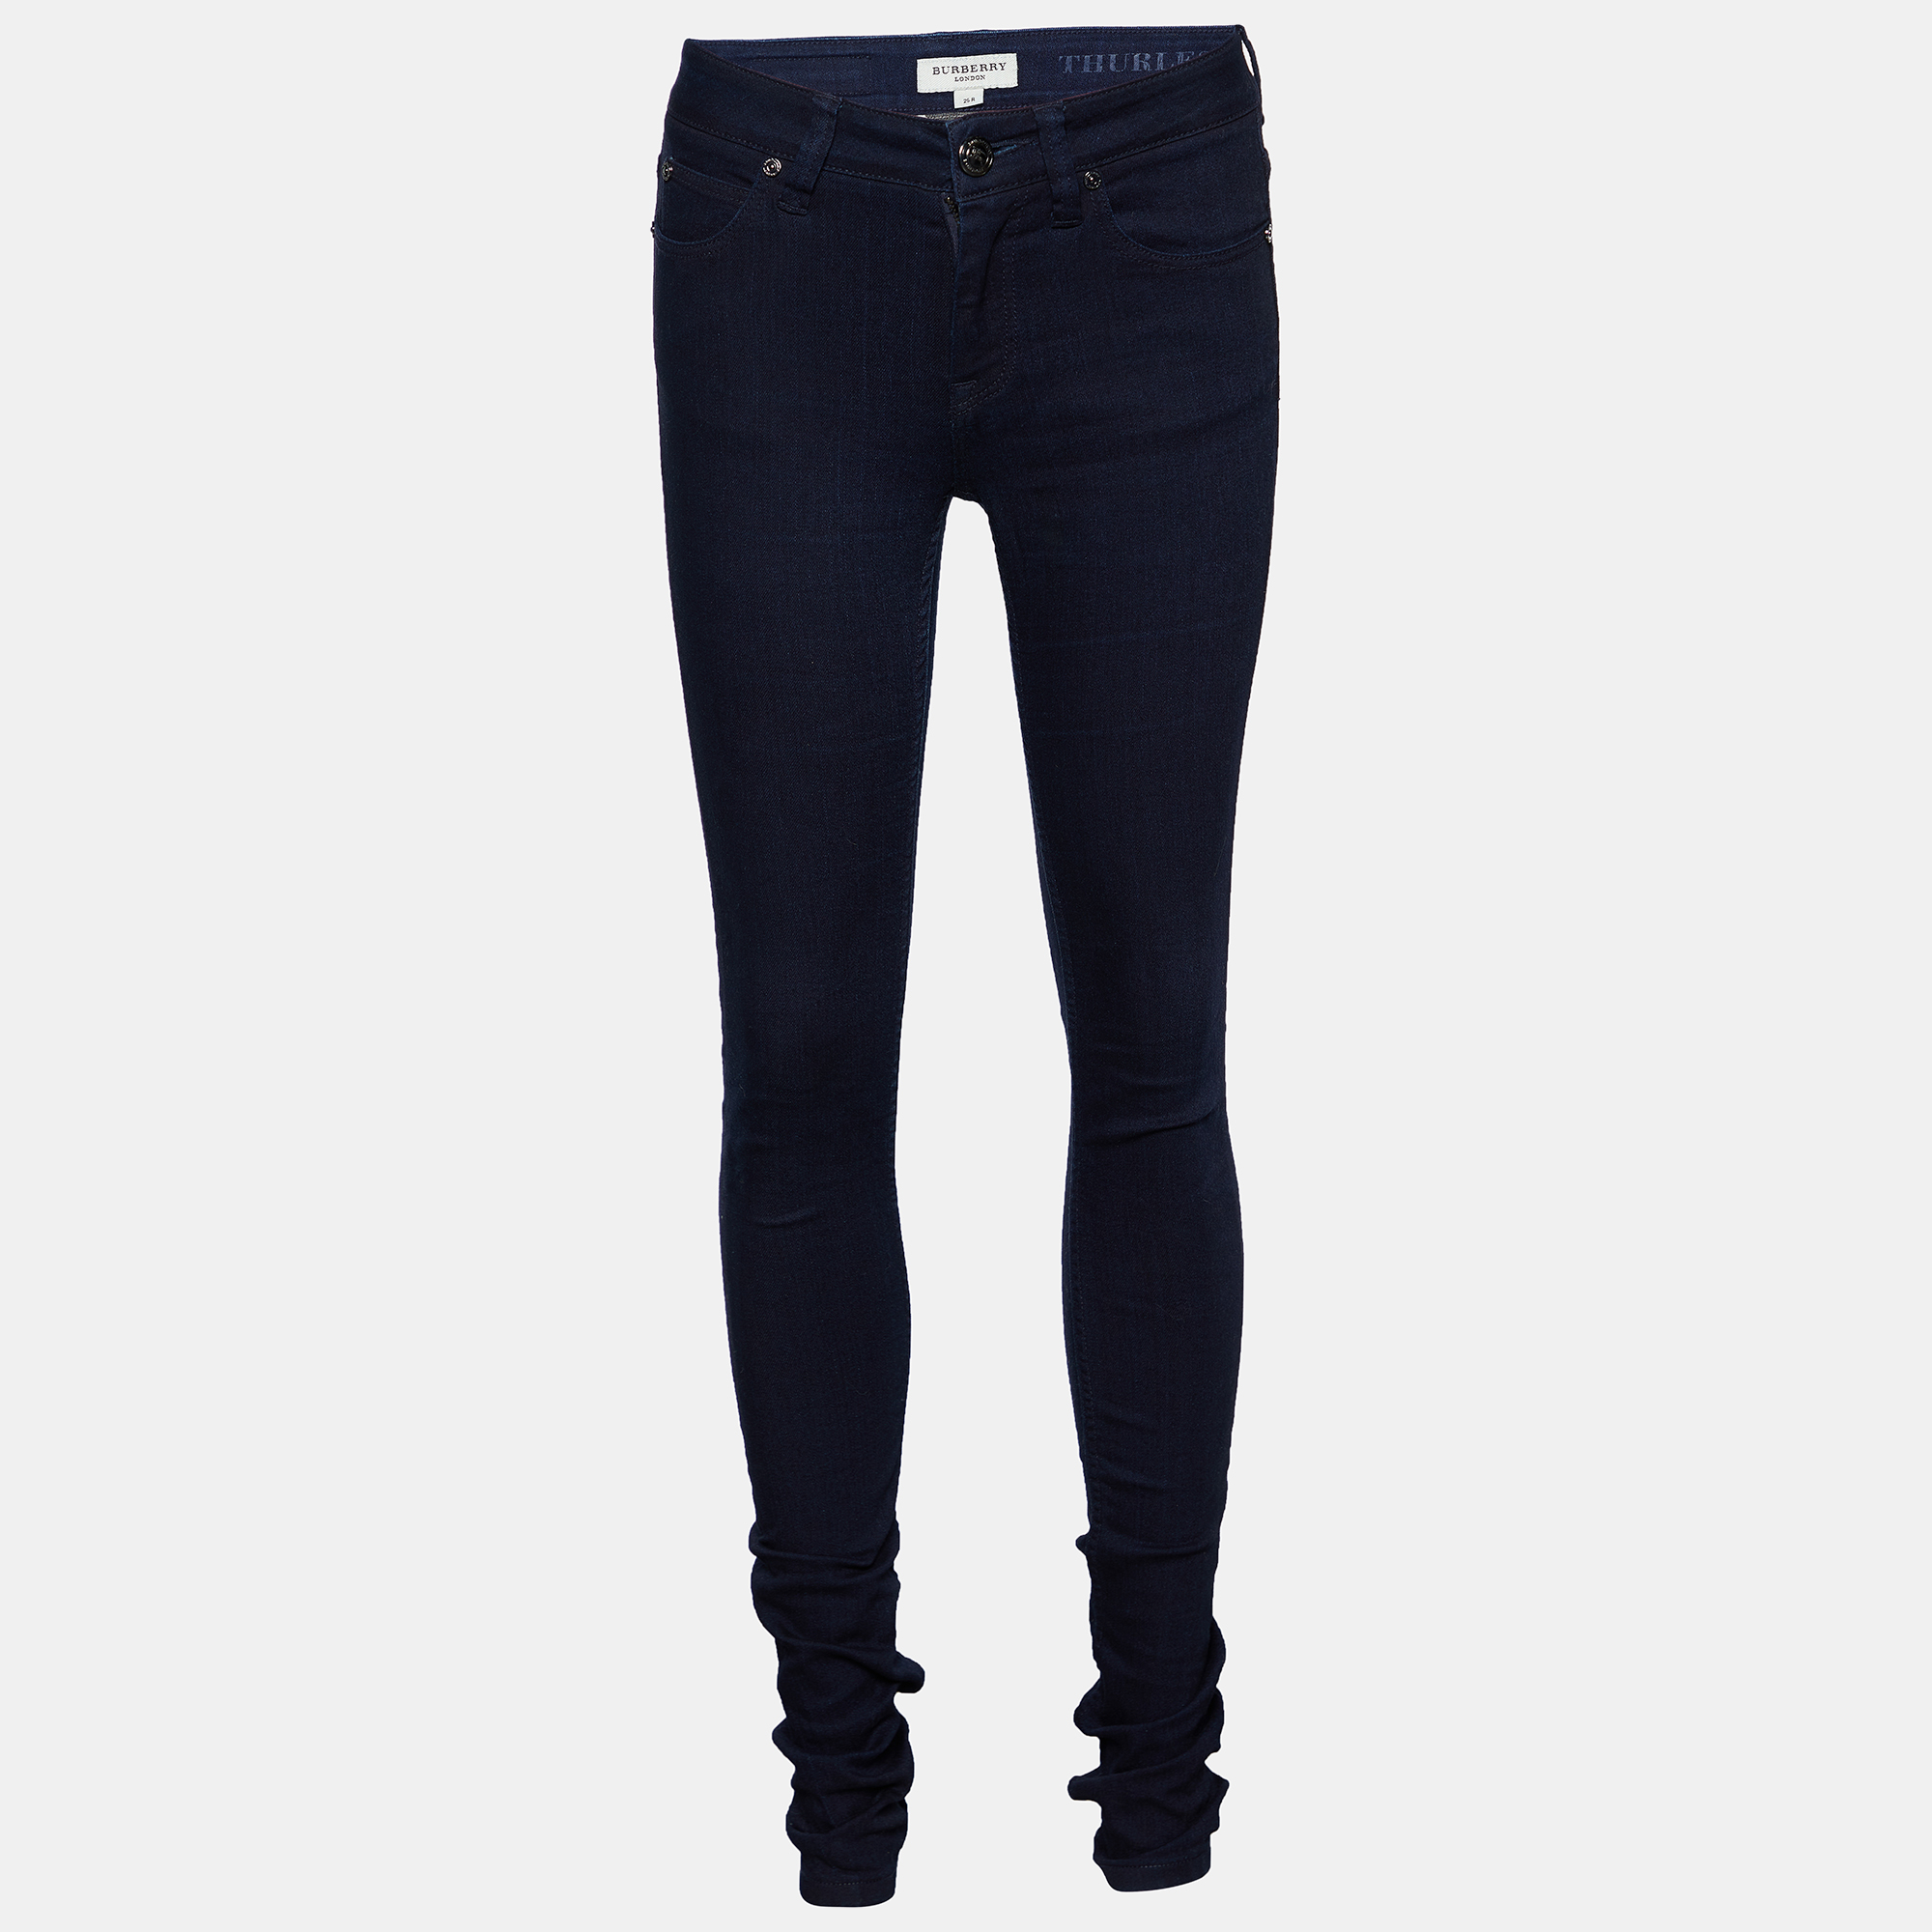 Burberry Navy Blue Denim Thurlestone Skinny Jeans S Waist 28